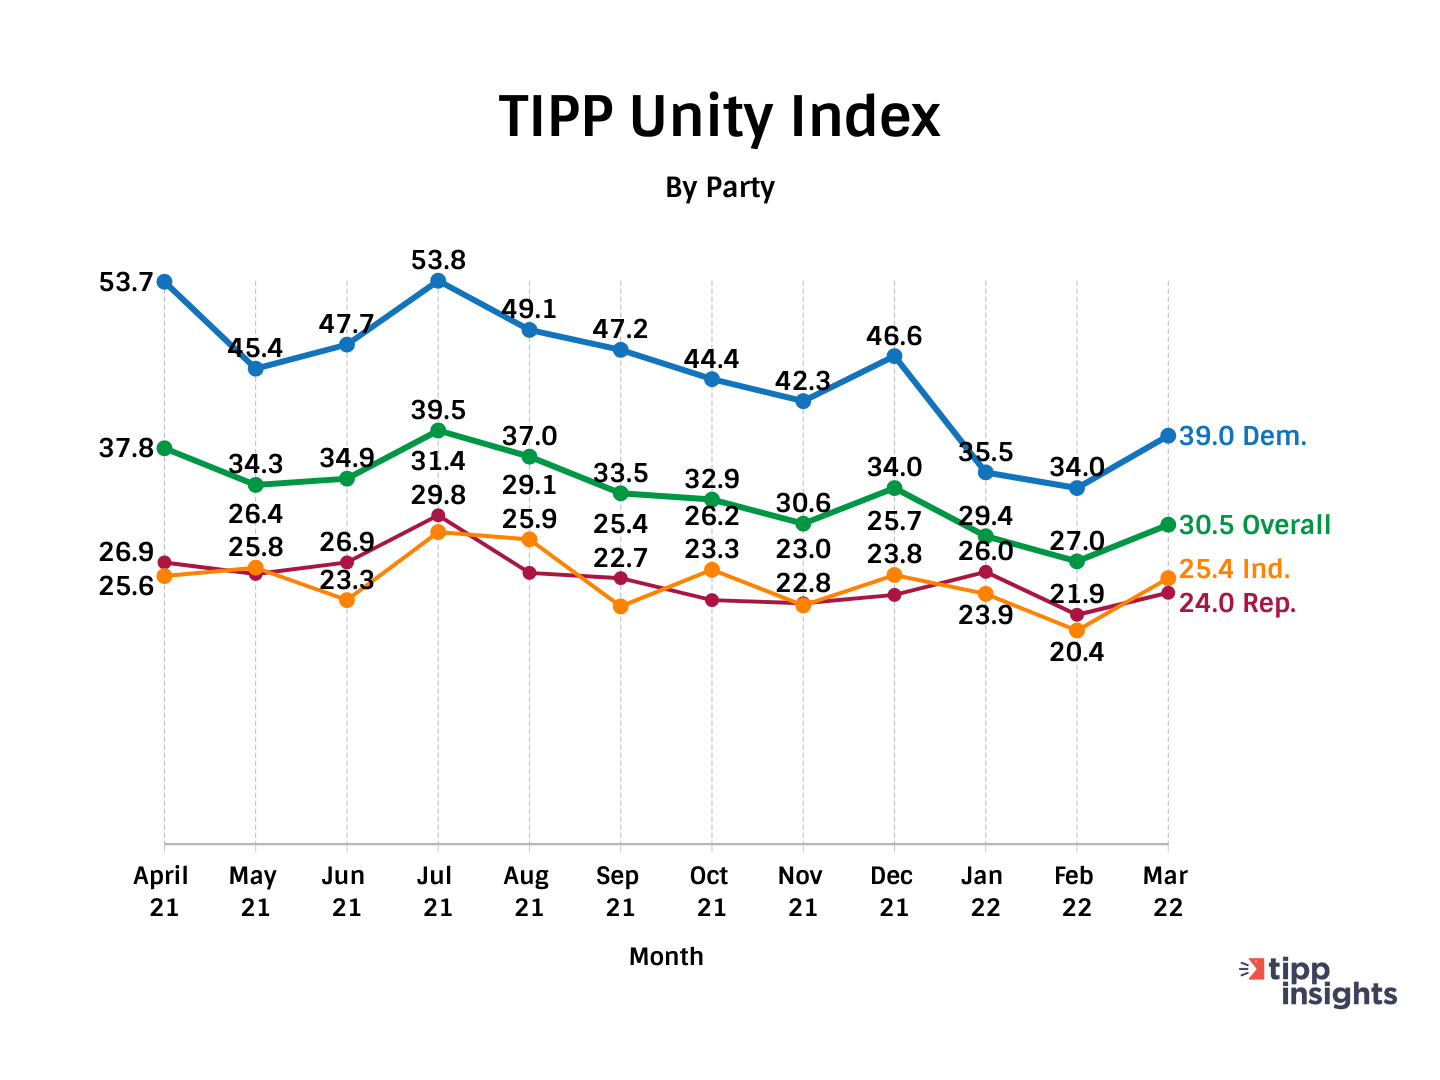 TIPP Unity Index - March 2022